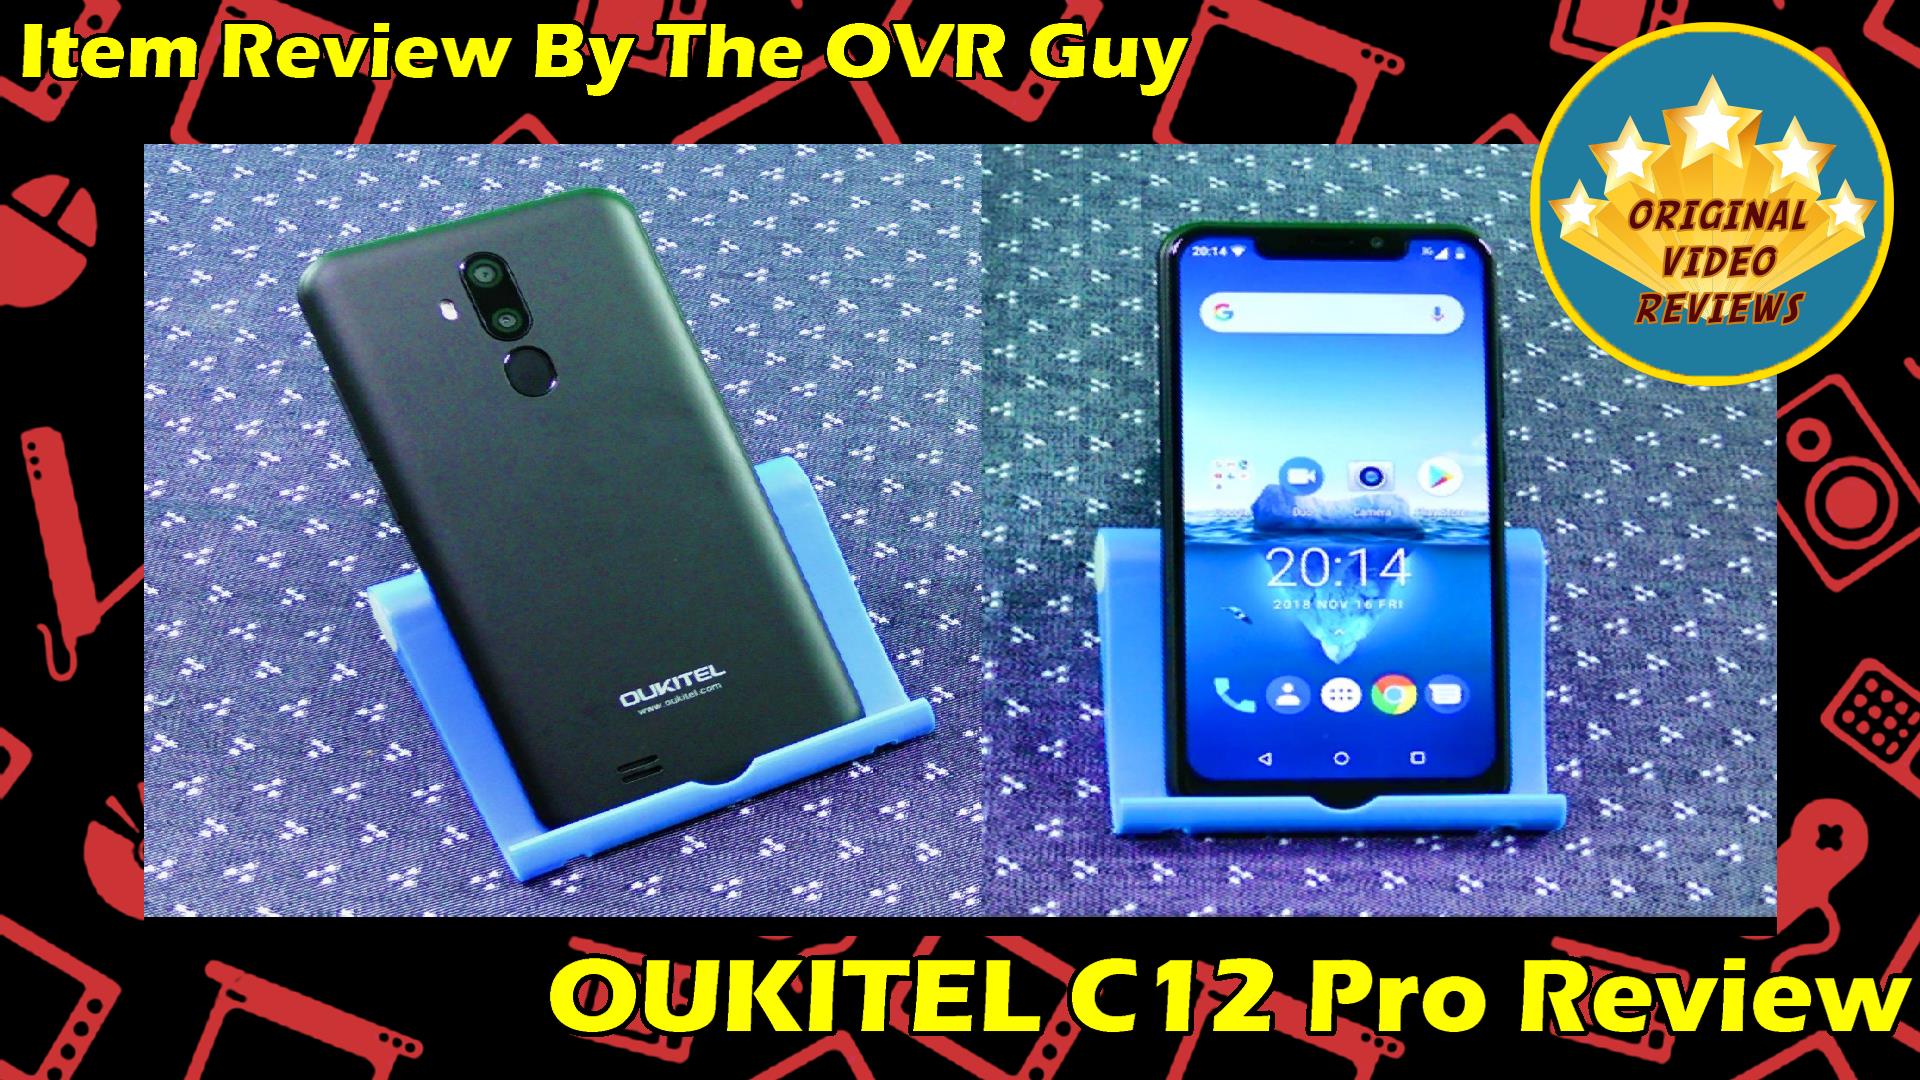 OUKITEL C12 Pro Review (Thumbnail)